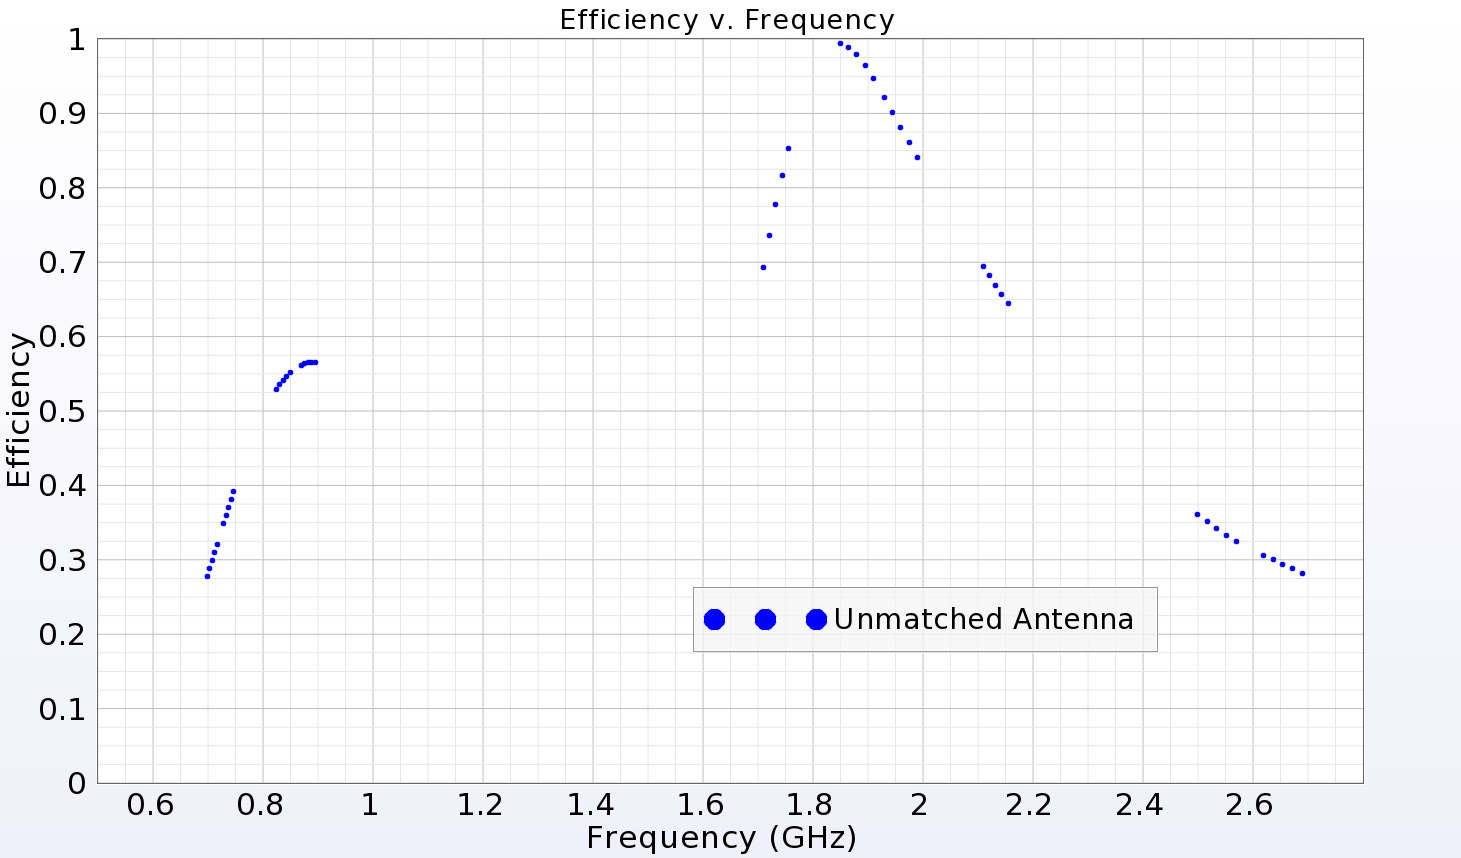 Figura 2: Eficacia del sistema de antena no emparejada.